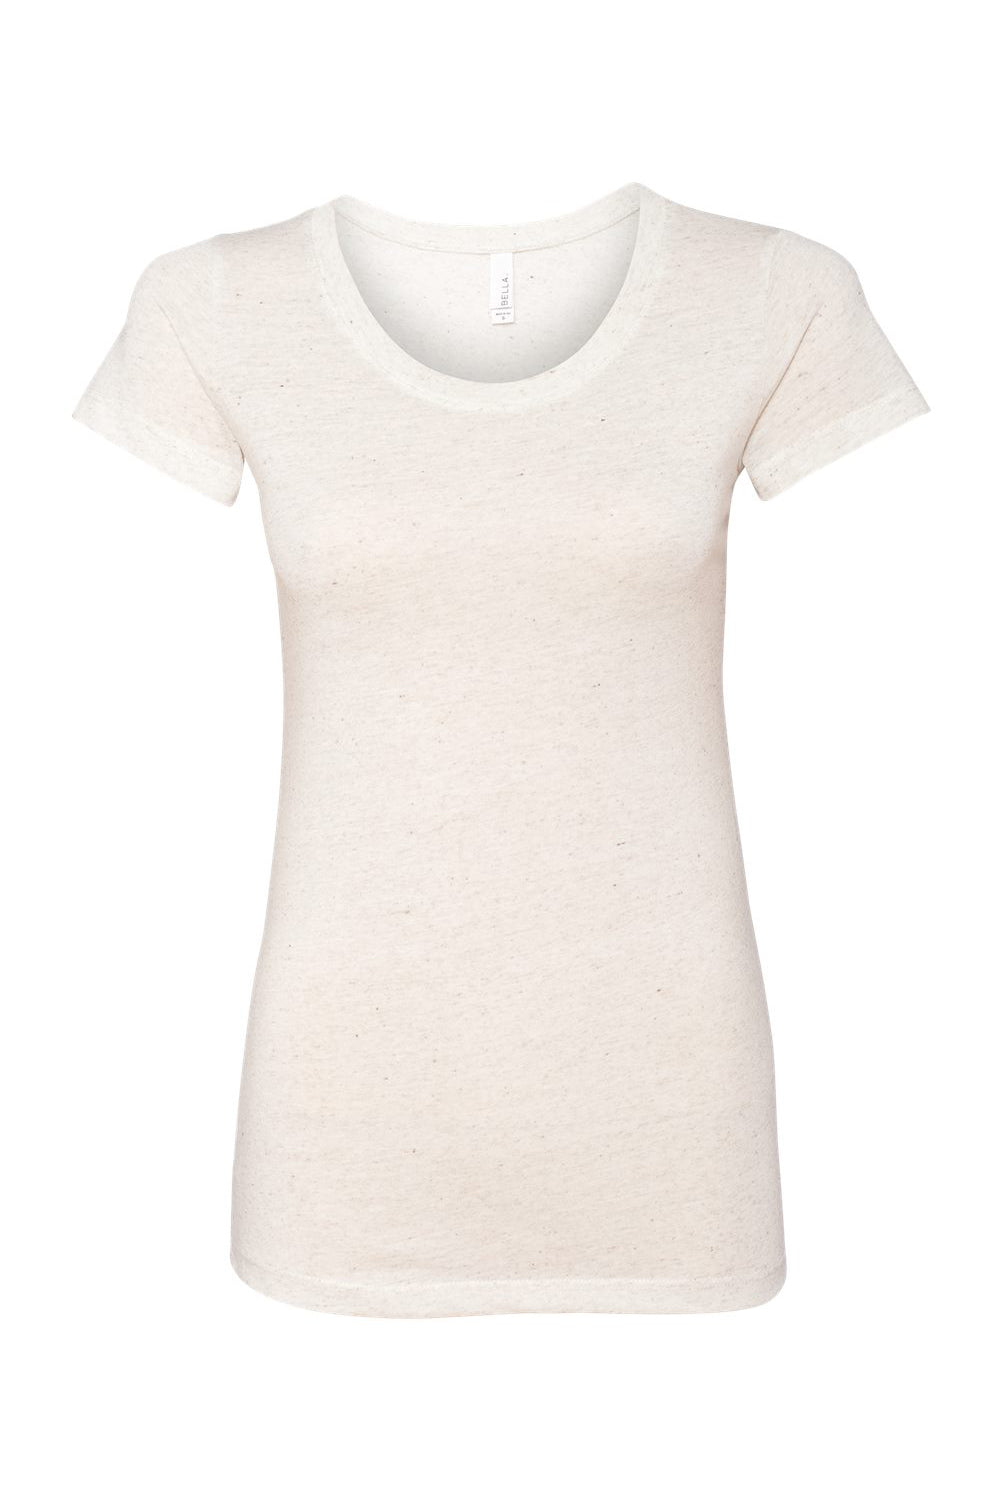 Bella + Canvas BC8413/B8413/8413 Womens Short Sleeve Crewneck T-Shirt Oatmeal Flat Front